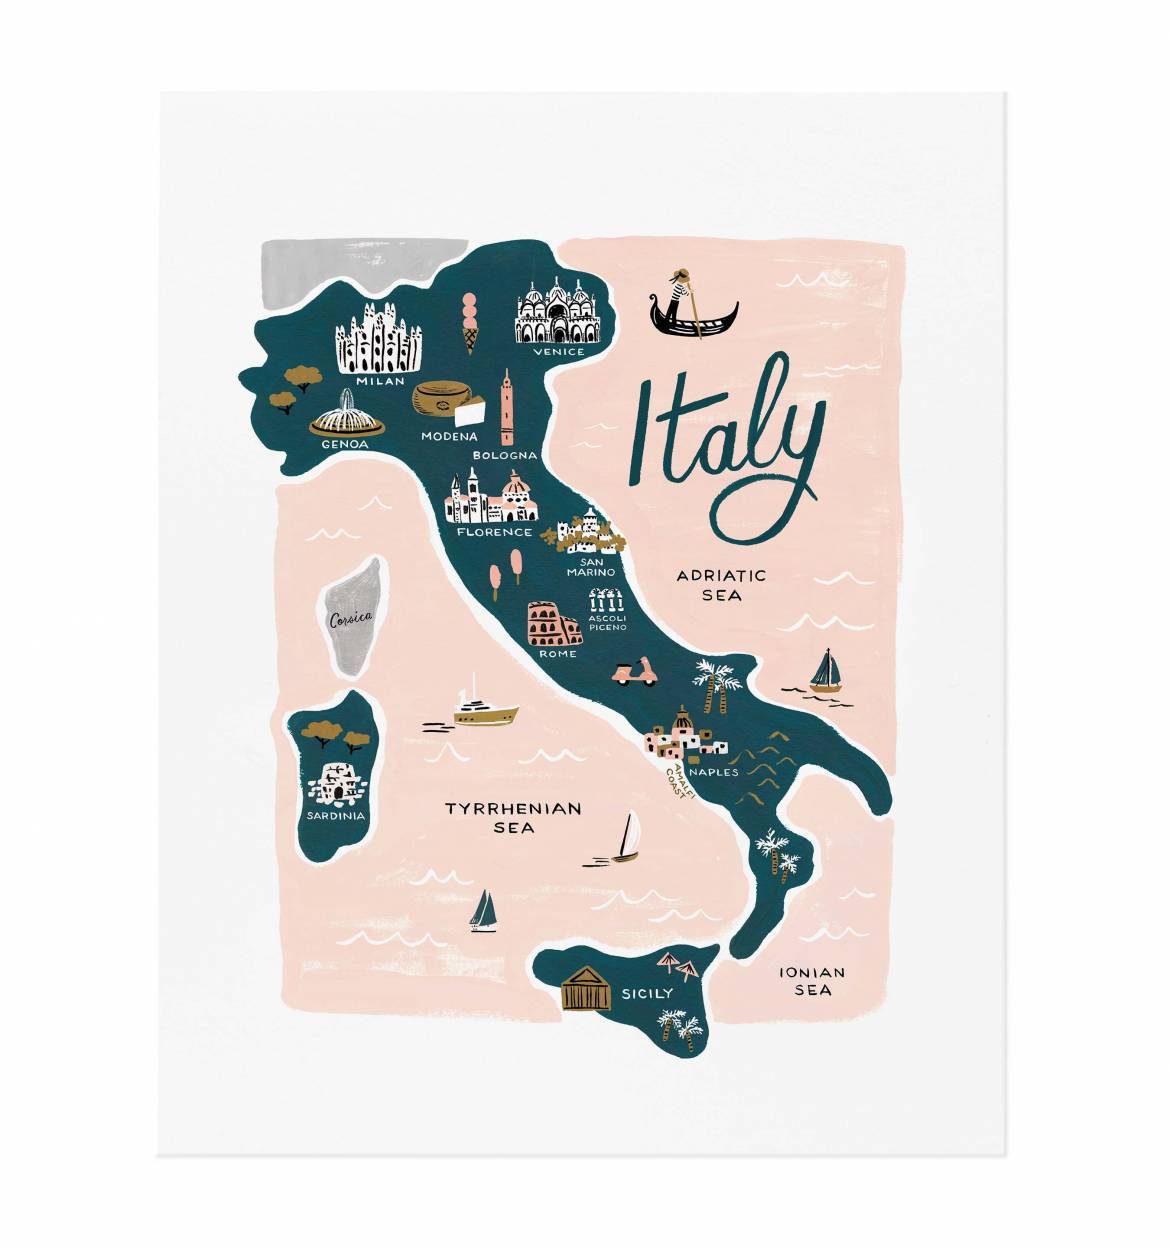 Italy Art Print